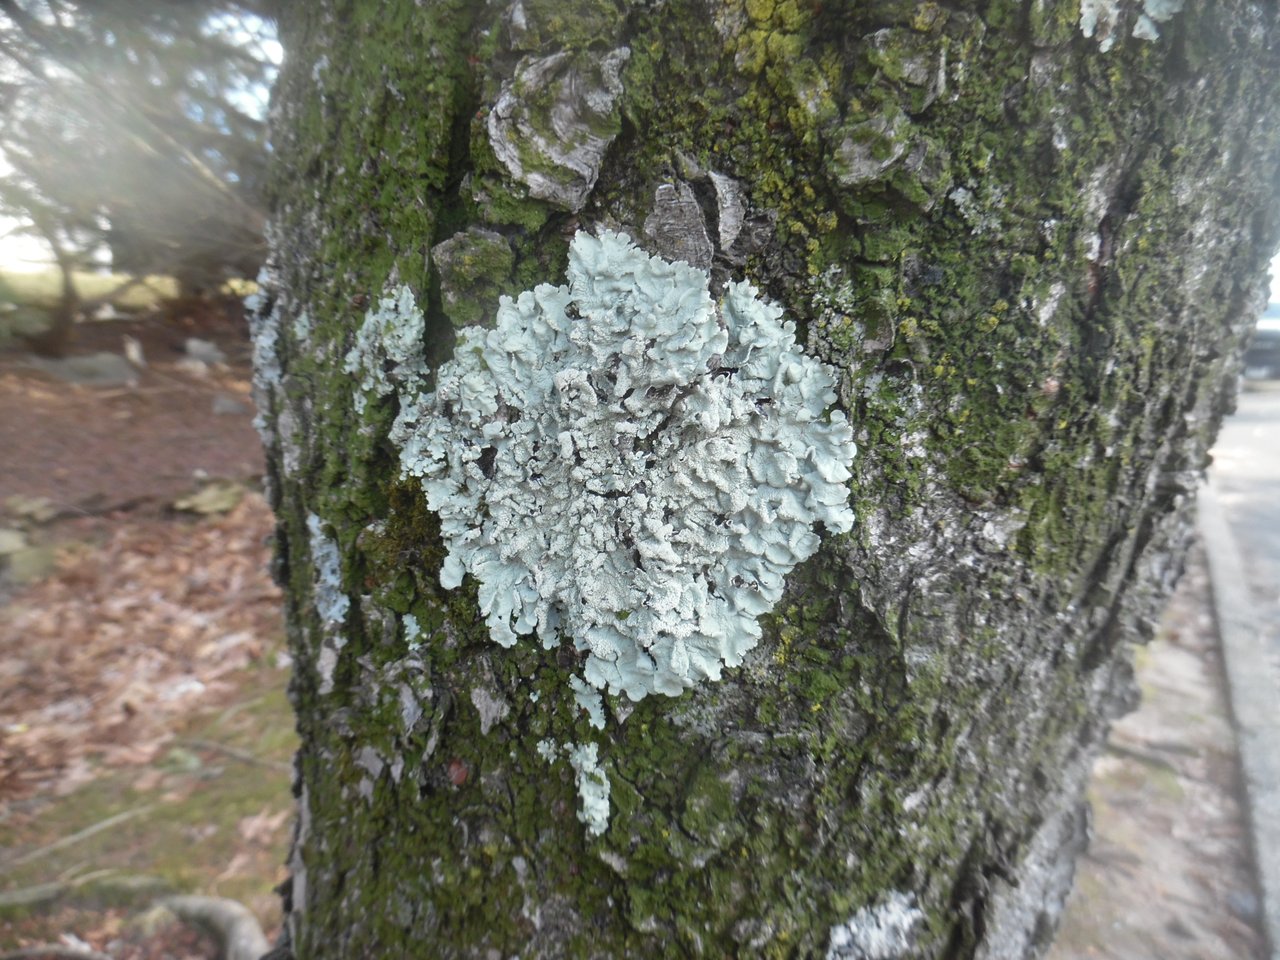 A lichen on a tree trunk